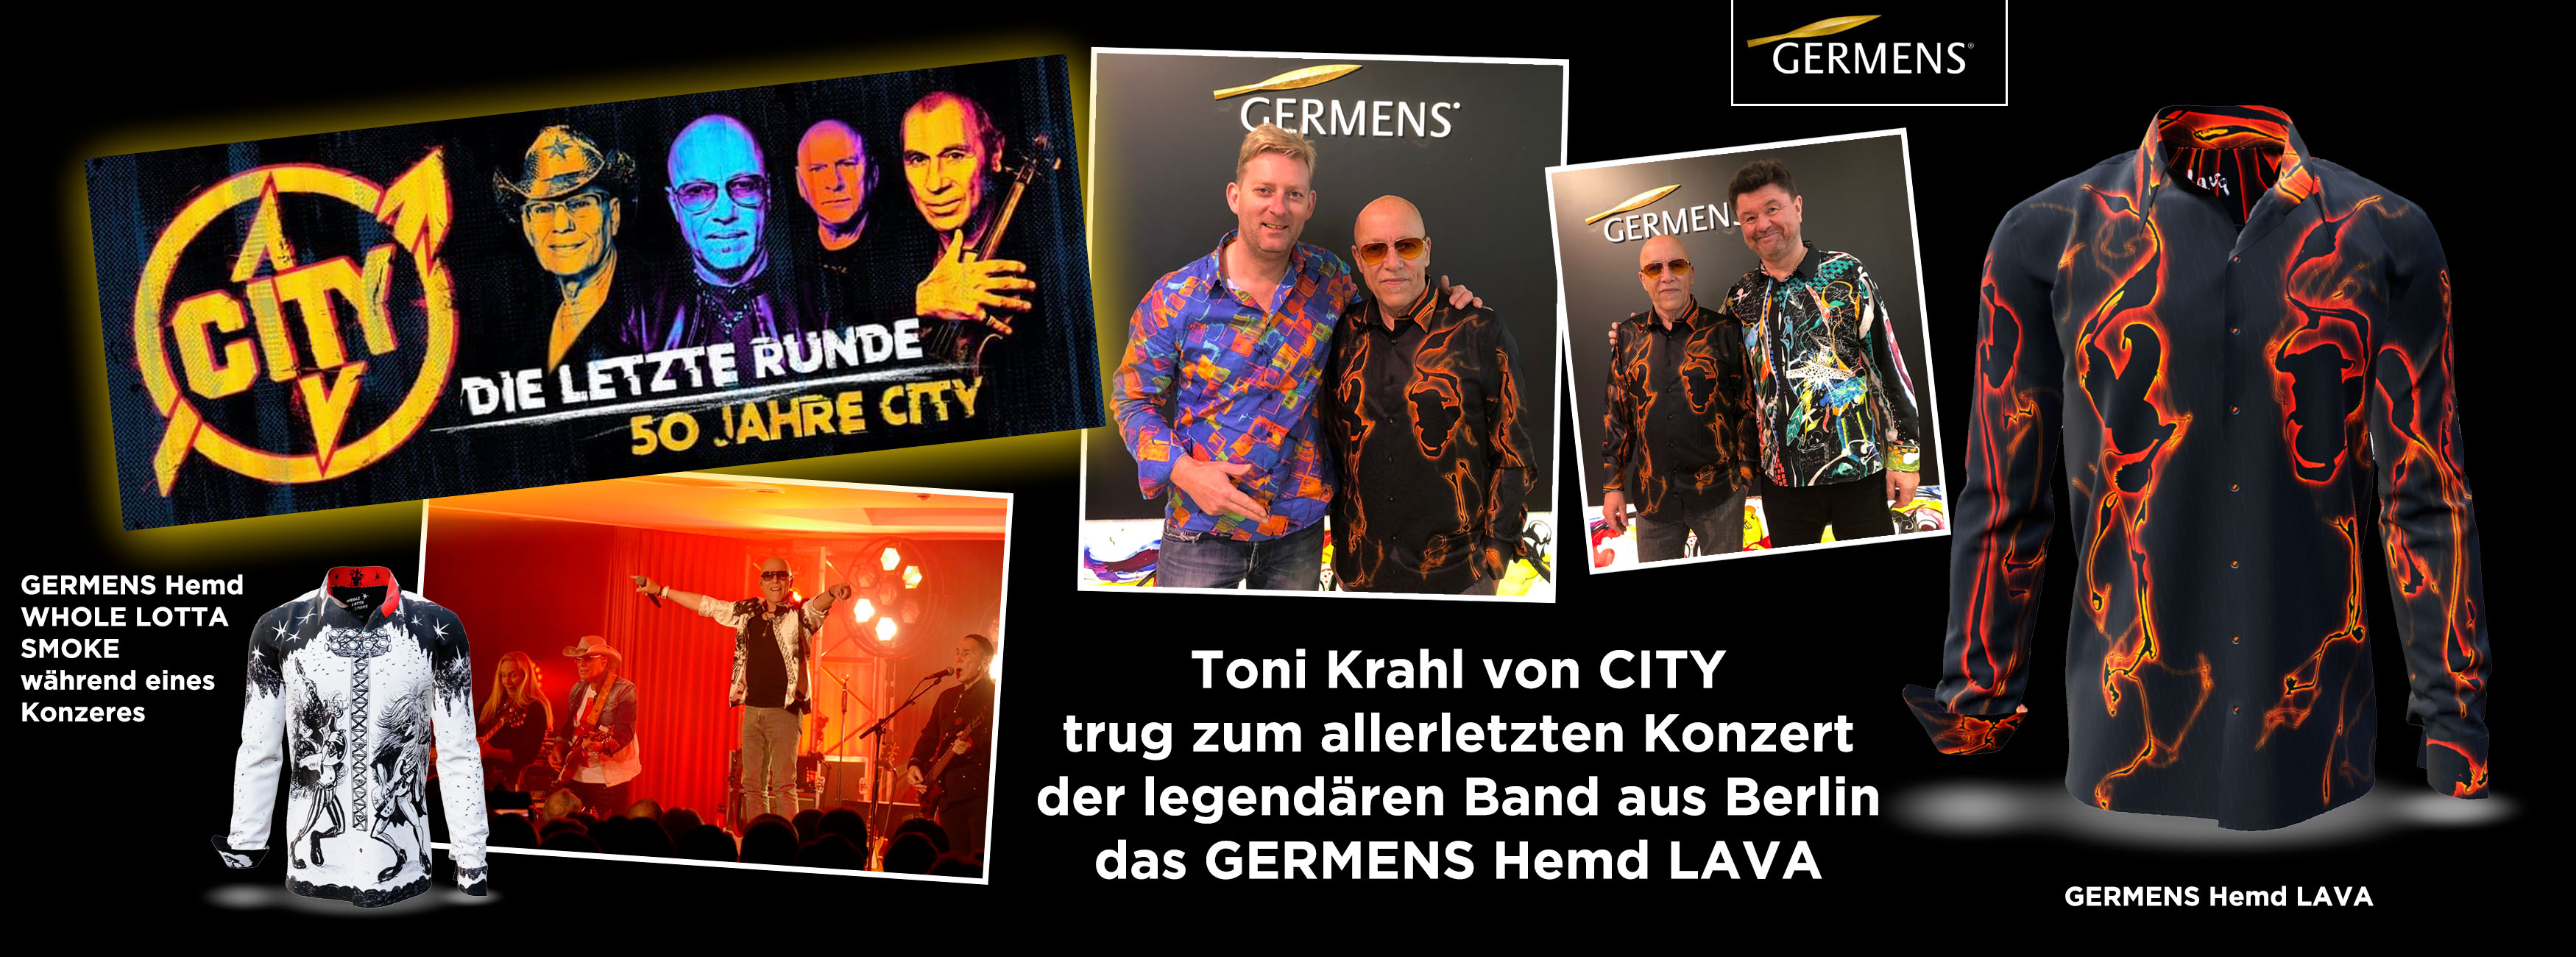 Toni Krahl von CITY im GERMENS Hemd WHOLE LOTTA SMOKE und LAVA